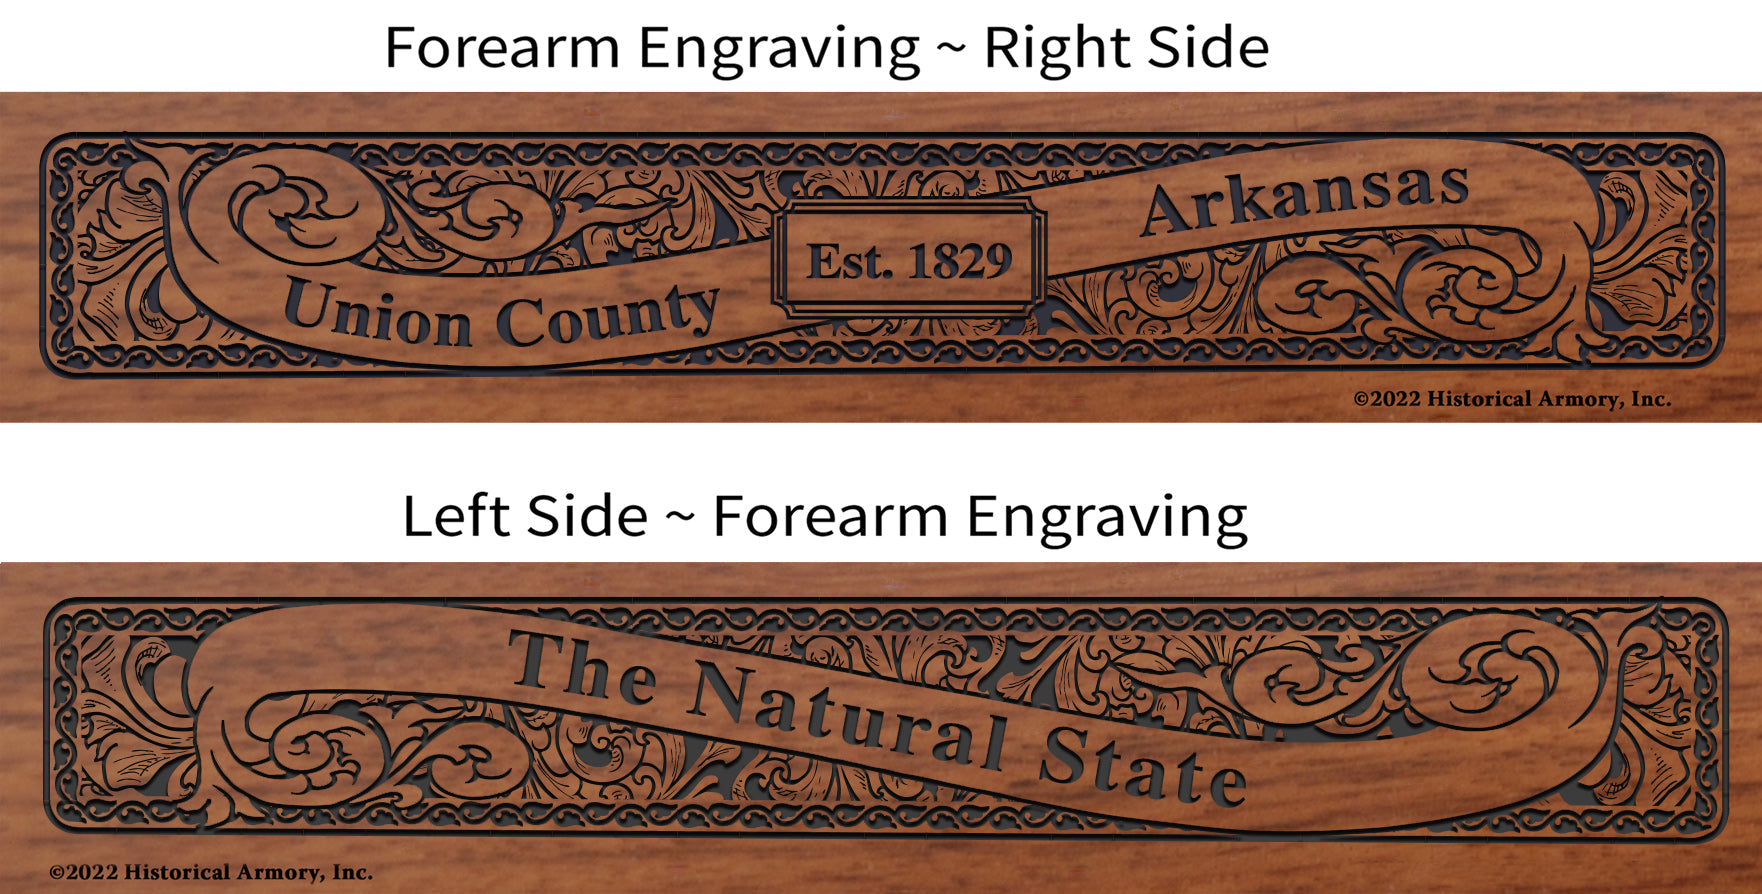 Union County Arkansas Engraved Rifle Forearm